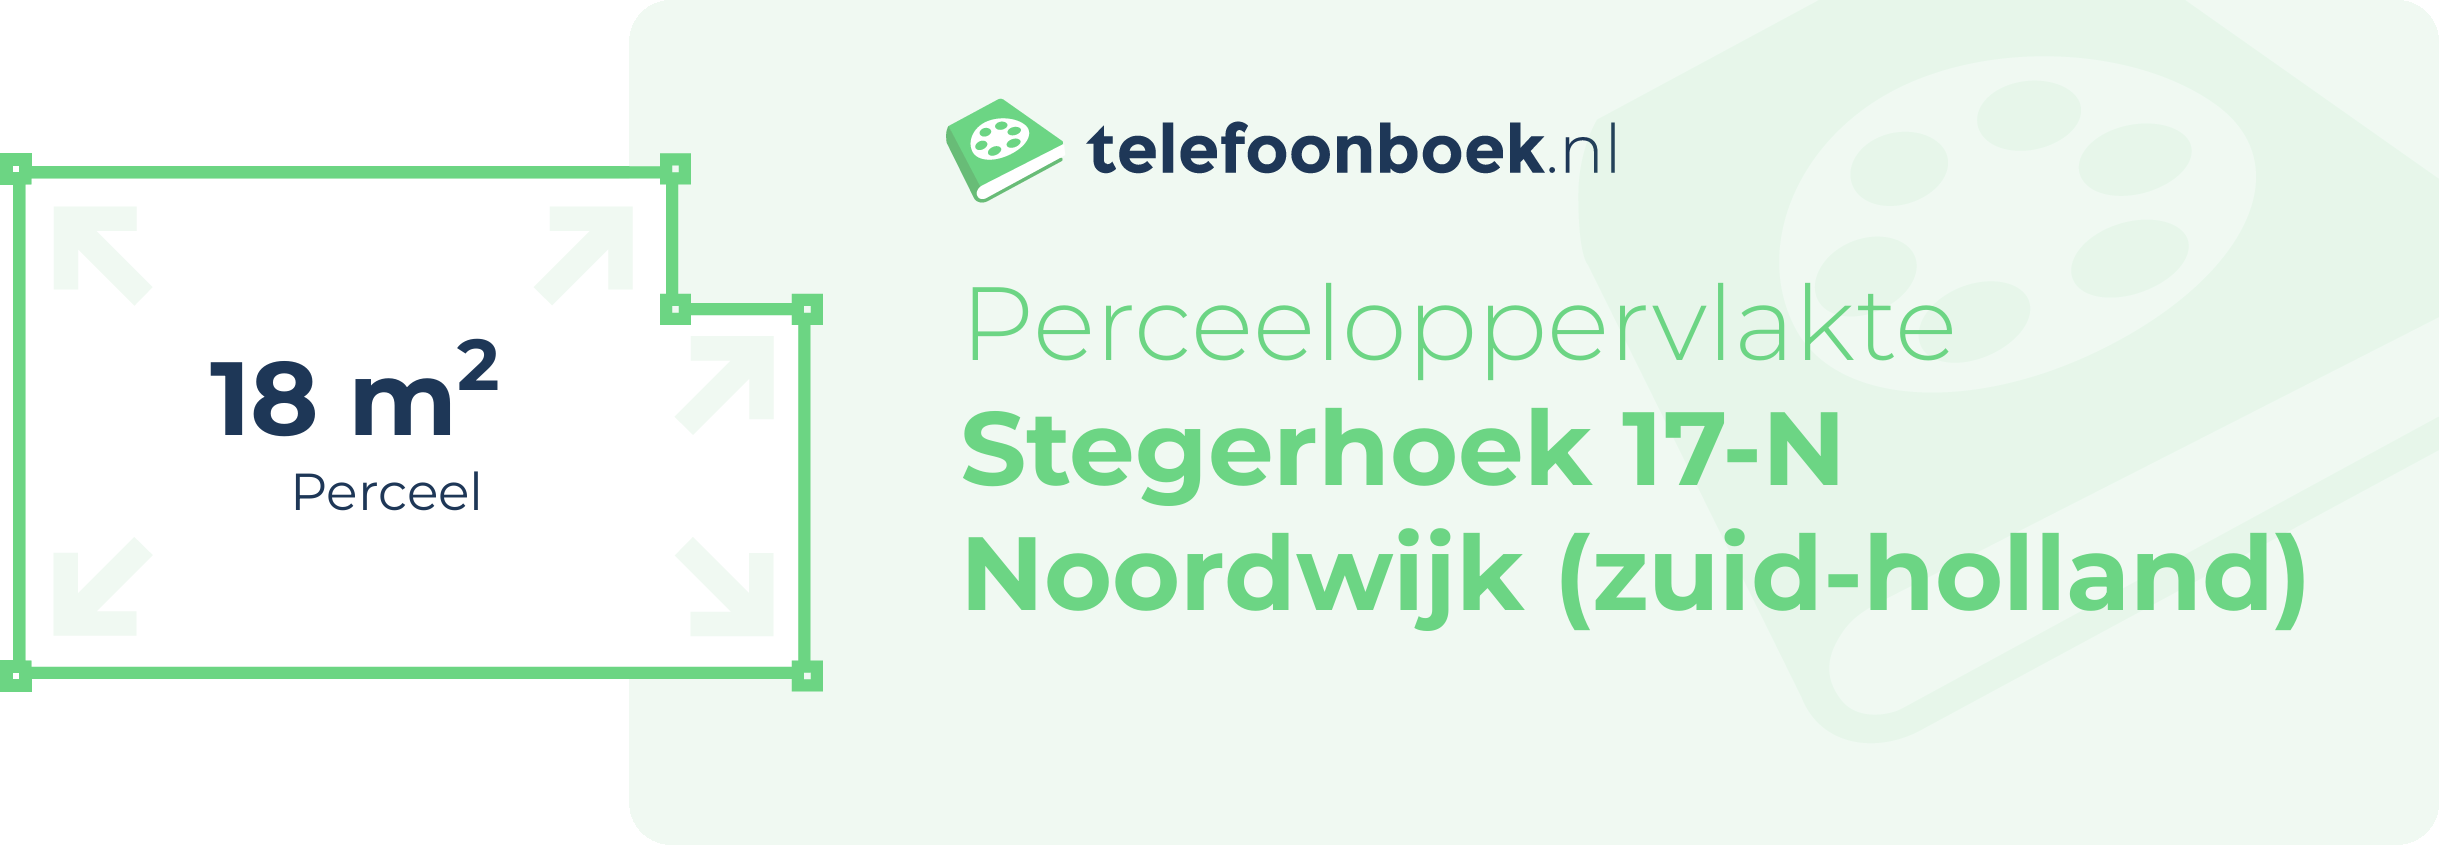 Perceeloppervlakte Stegerhoek 17-N Noordwijk (Zuid-Holland)